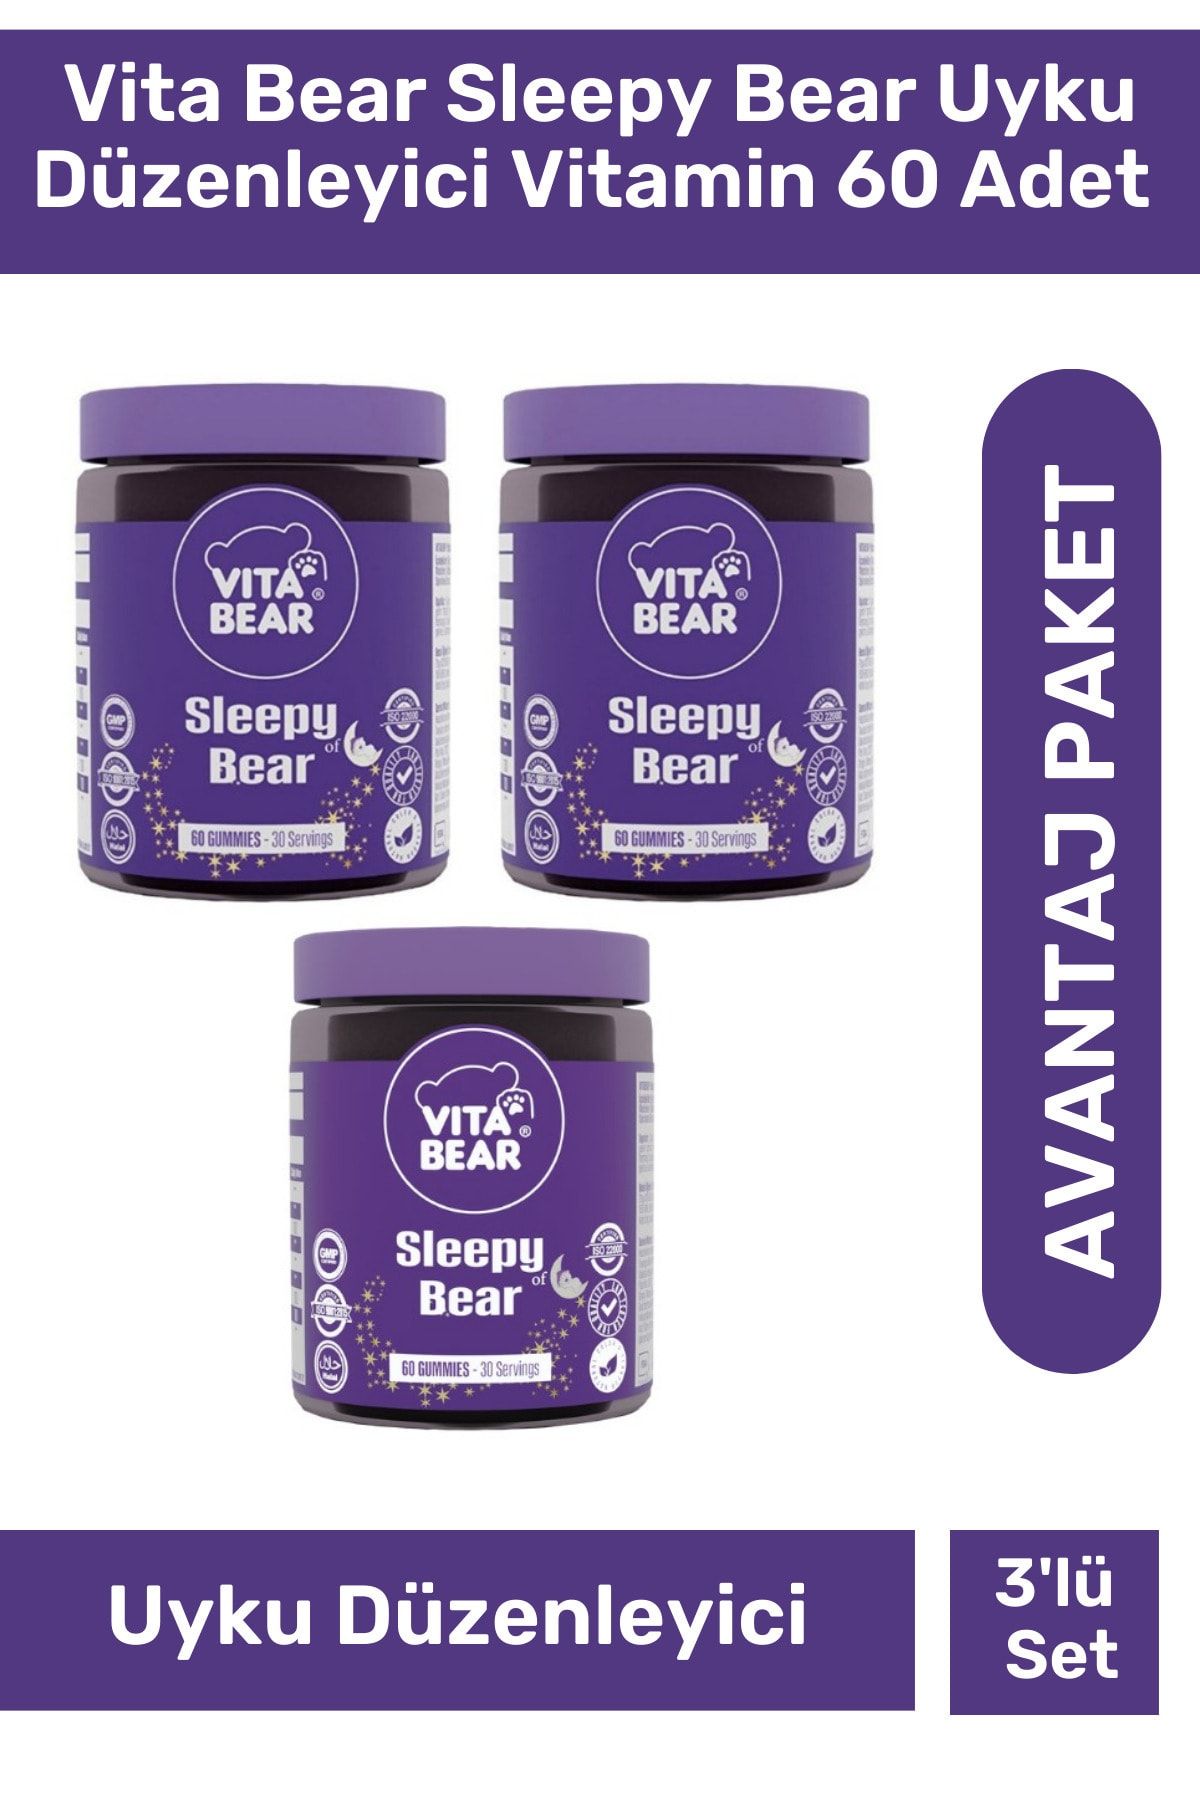 Vita Bear Sleepy Bear Uyku Düzenleyici Vitamin 60 Adet 3'lü Paket